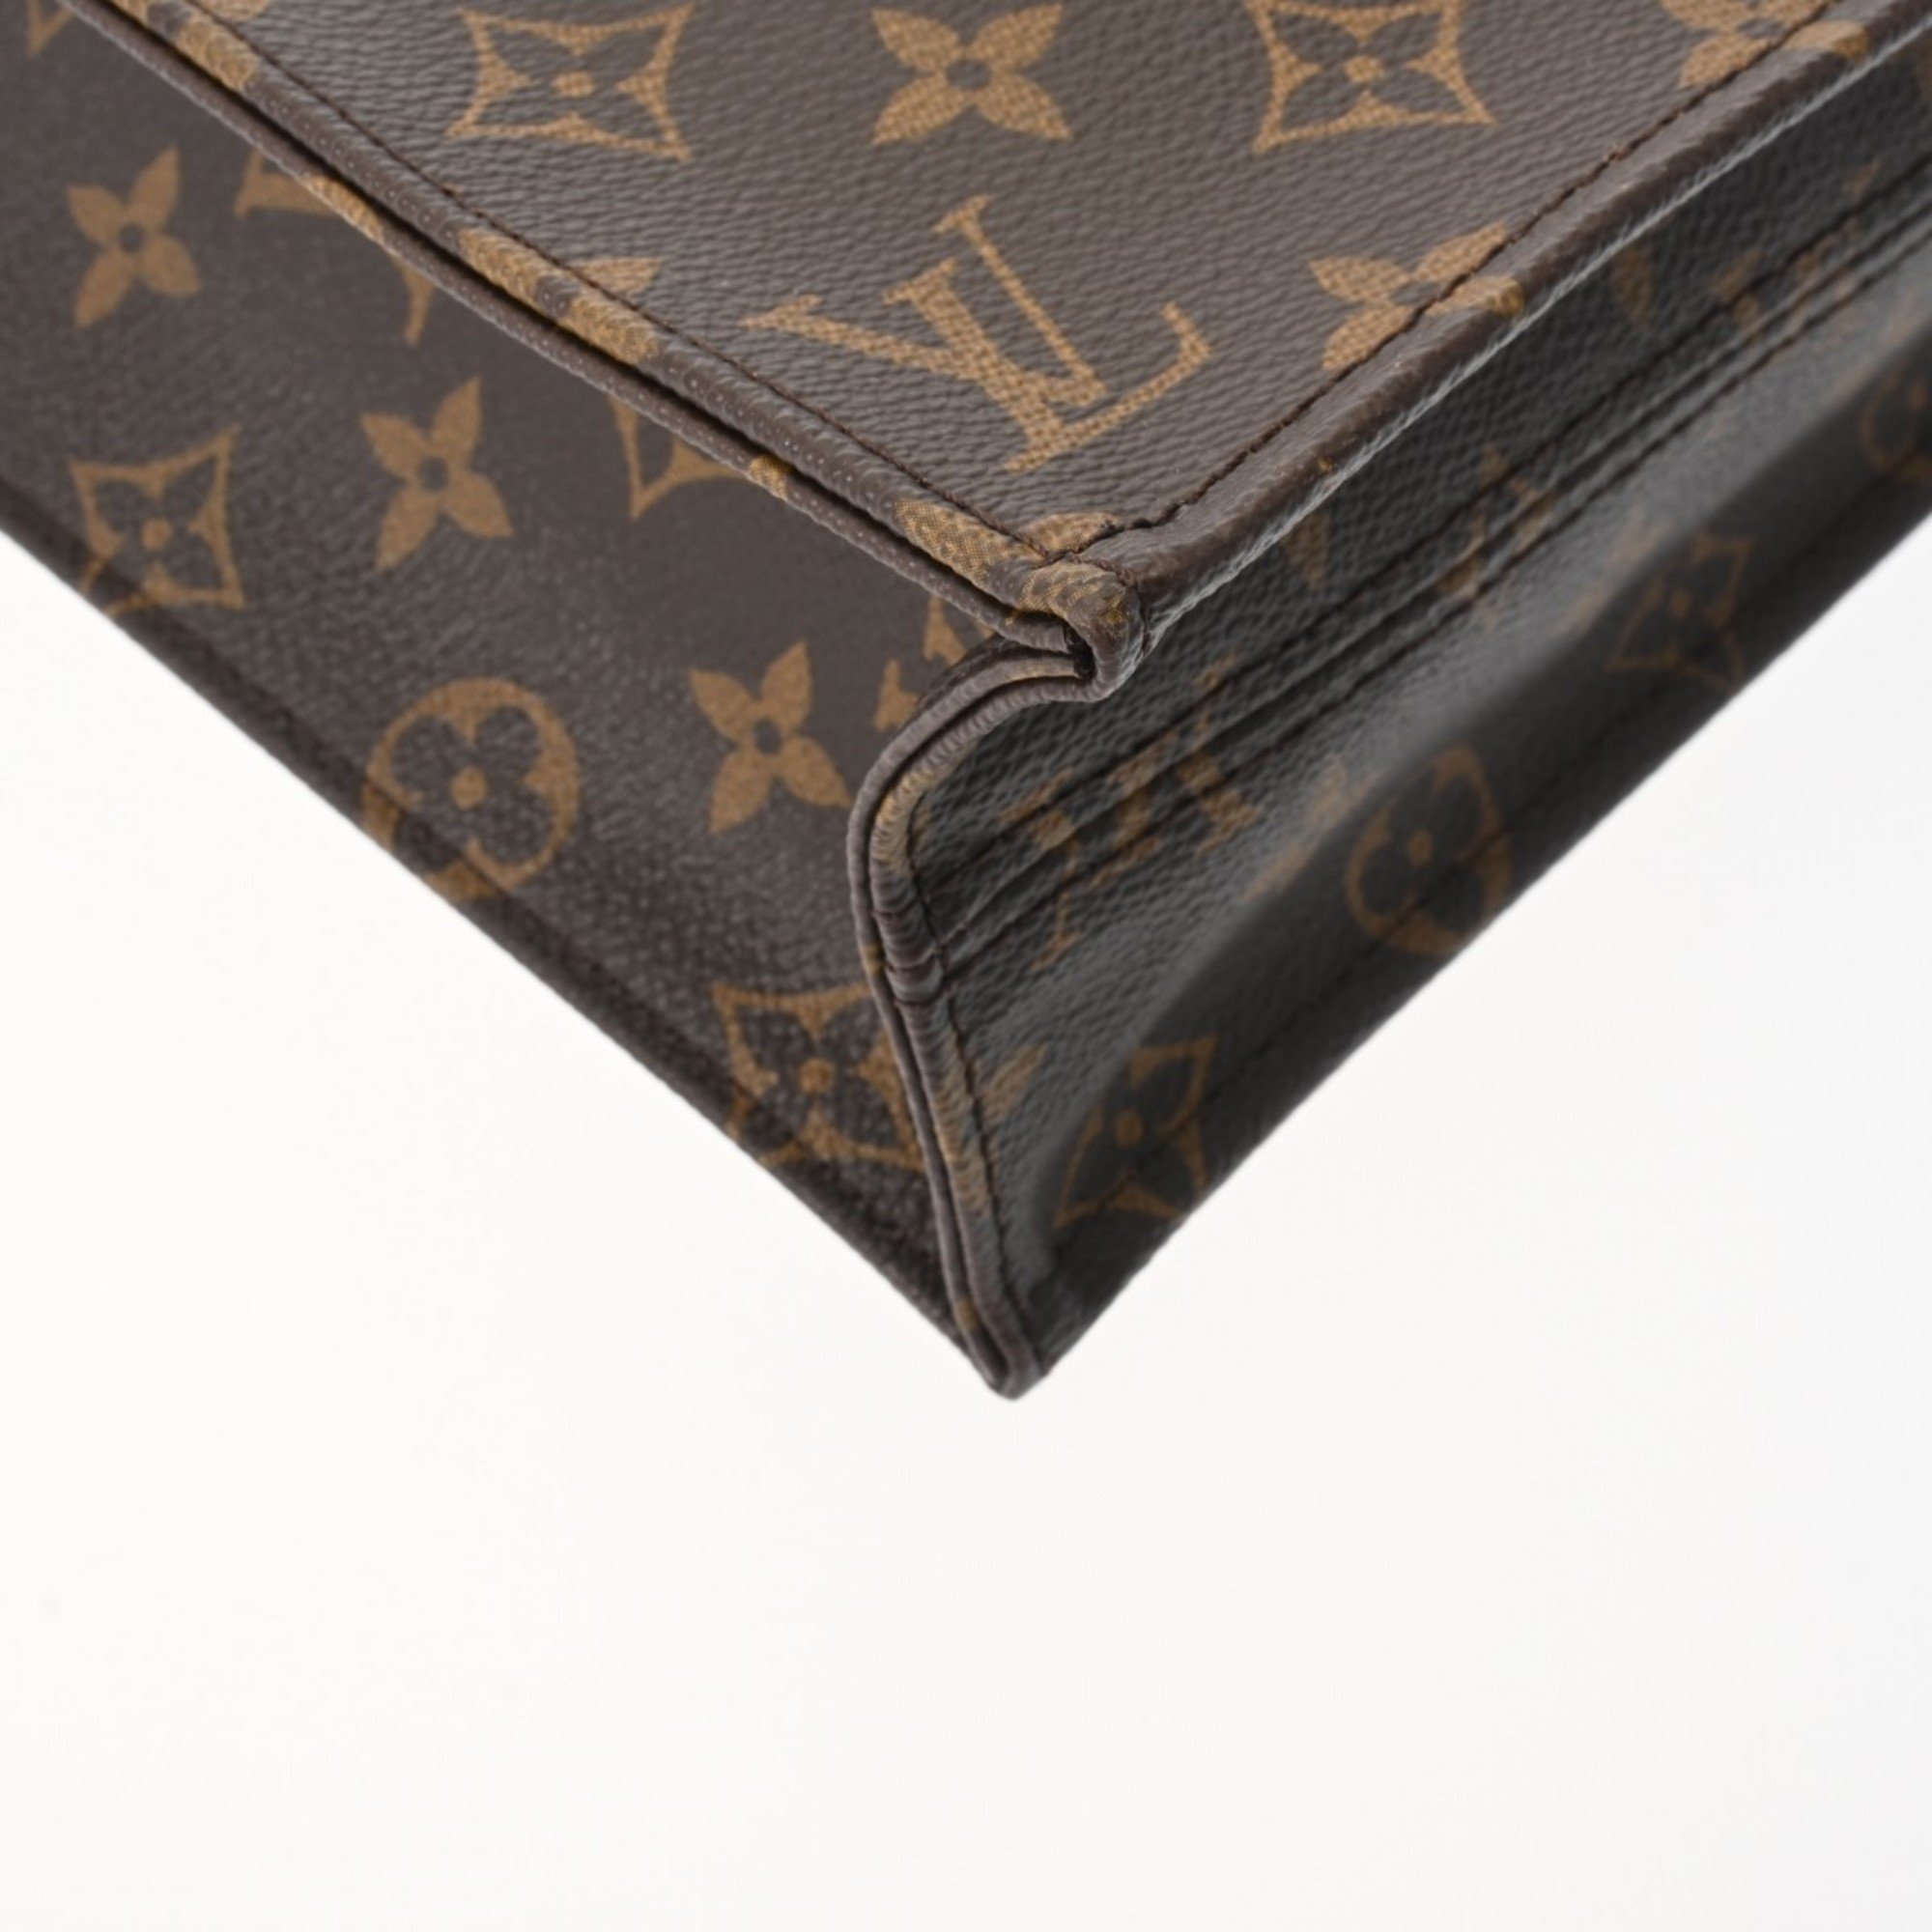 LOUIS VUITTON Louis Vuitton Monogram Sac Plat Brown M51140 Unisex Canvas Tote Bag